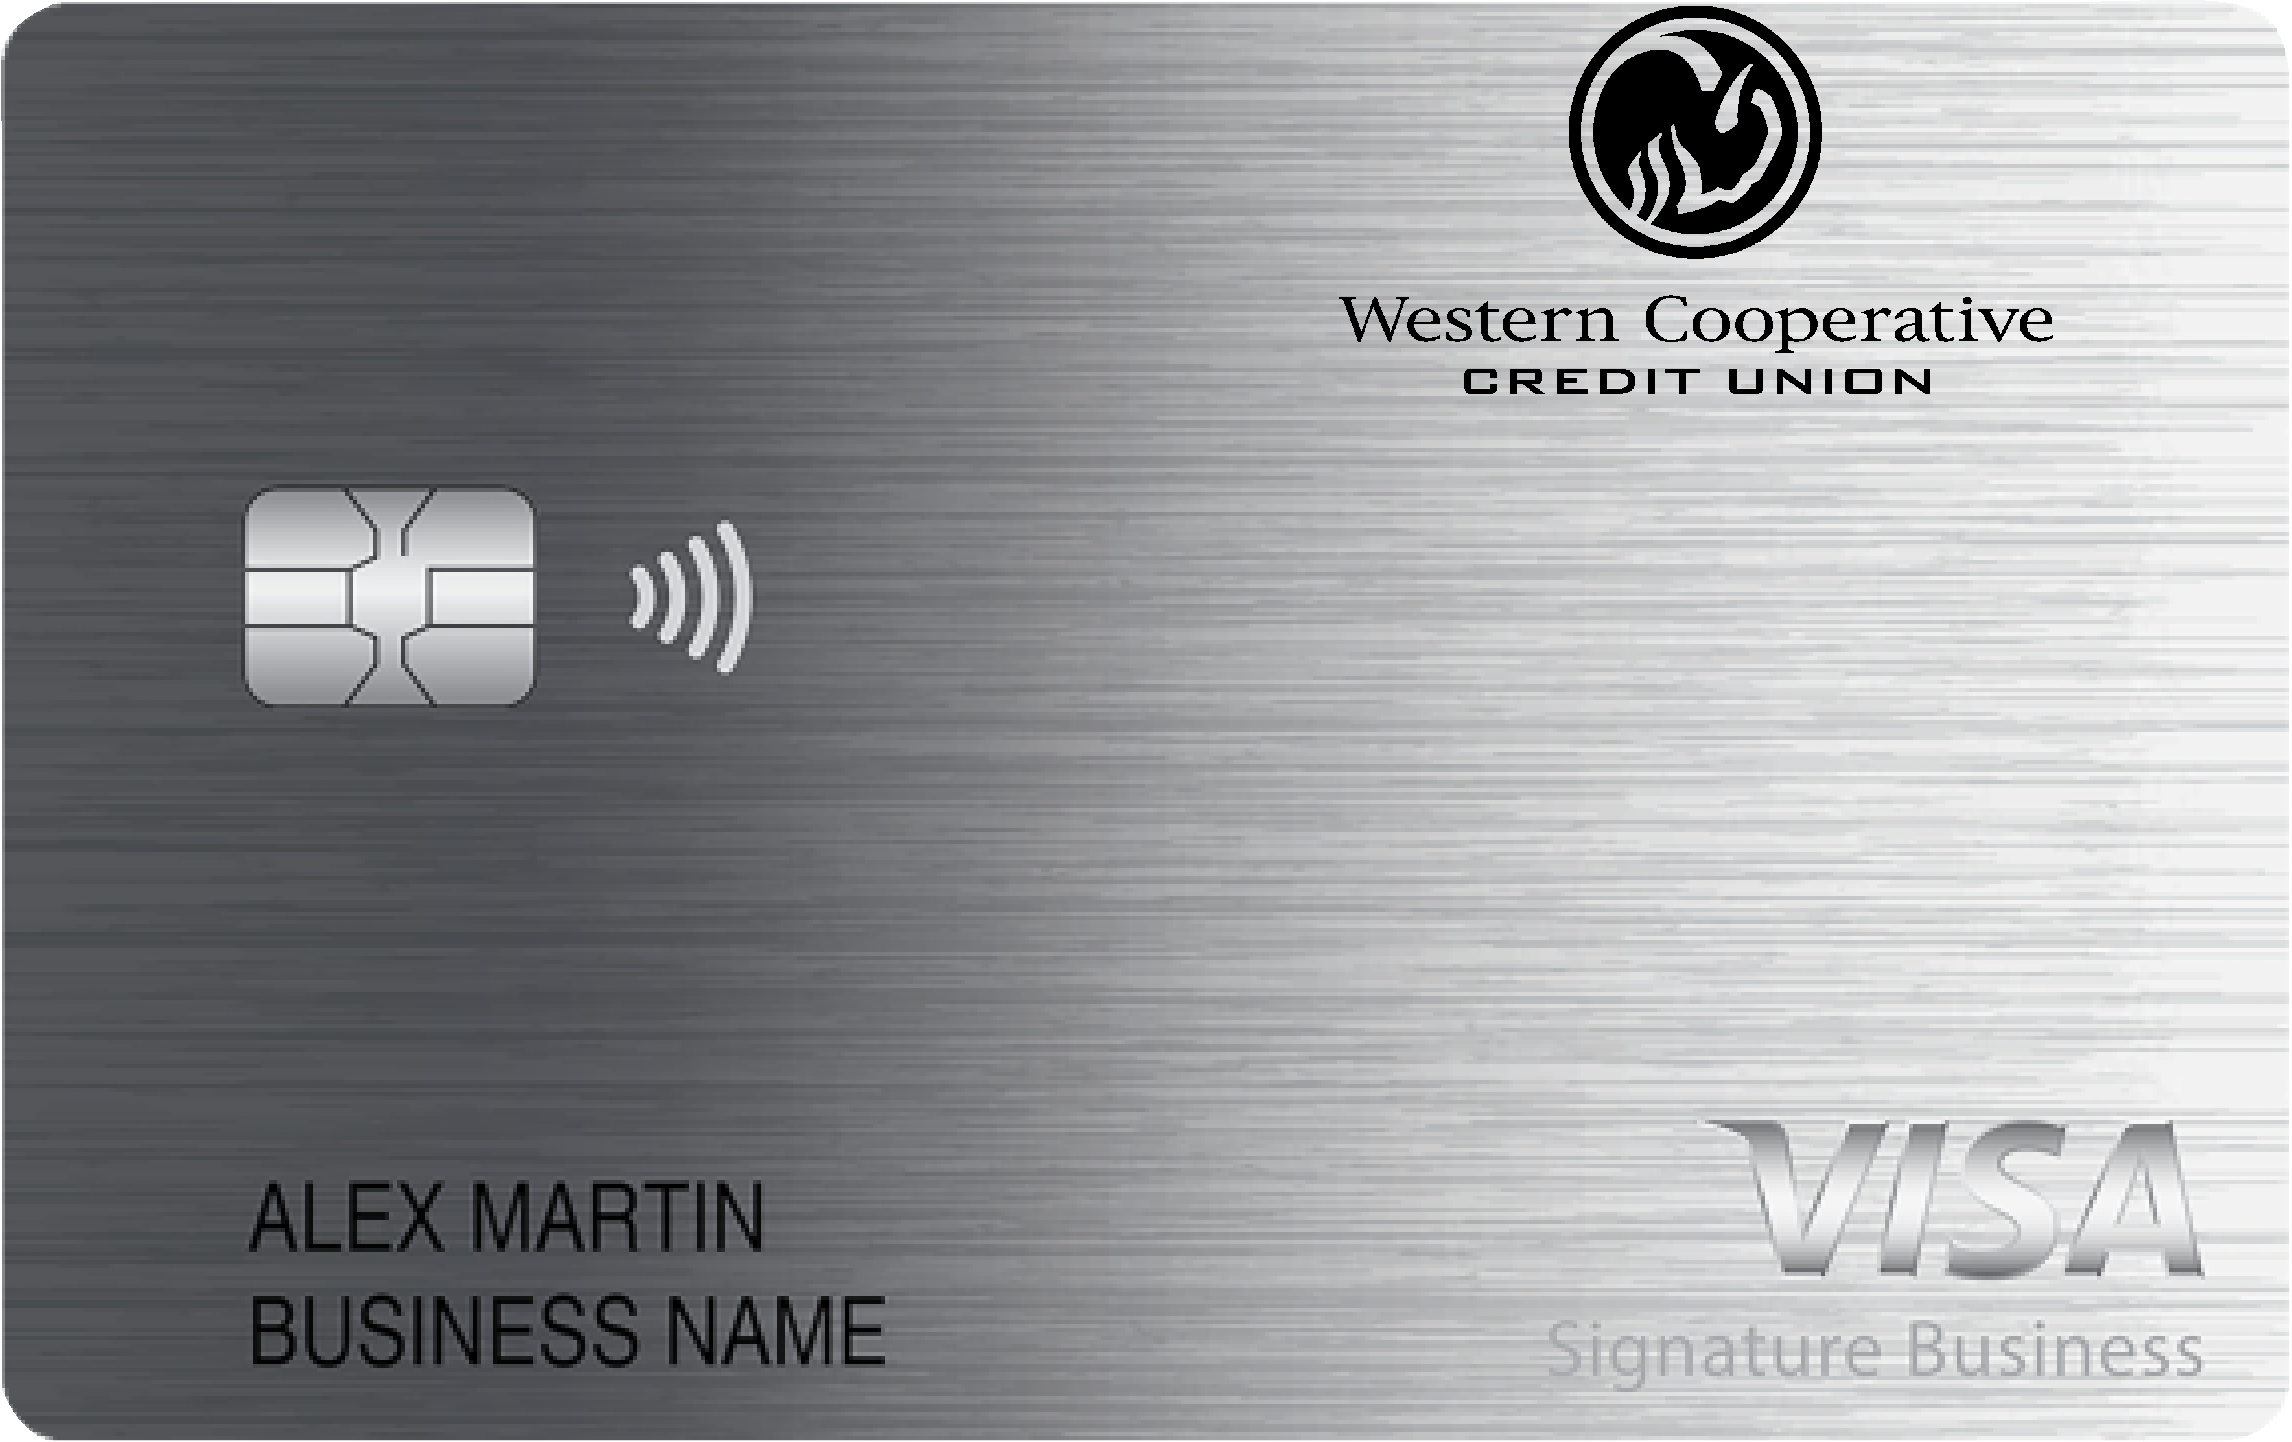 Western Cooperative Credit Union Smart Business Rewards Card